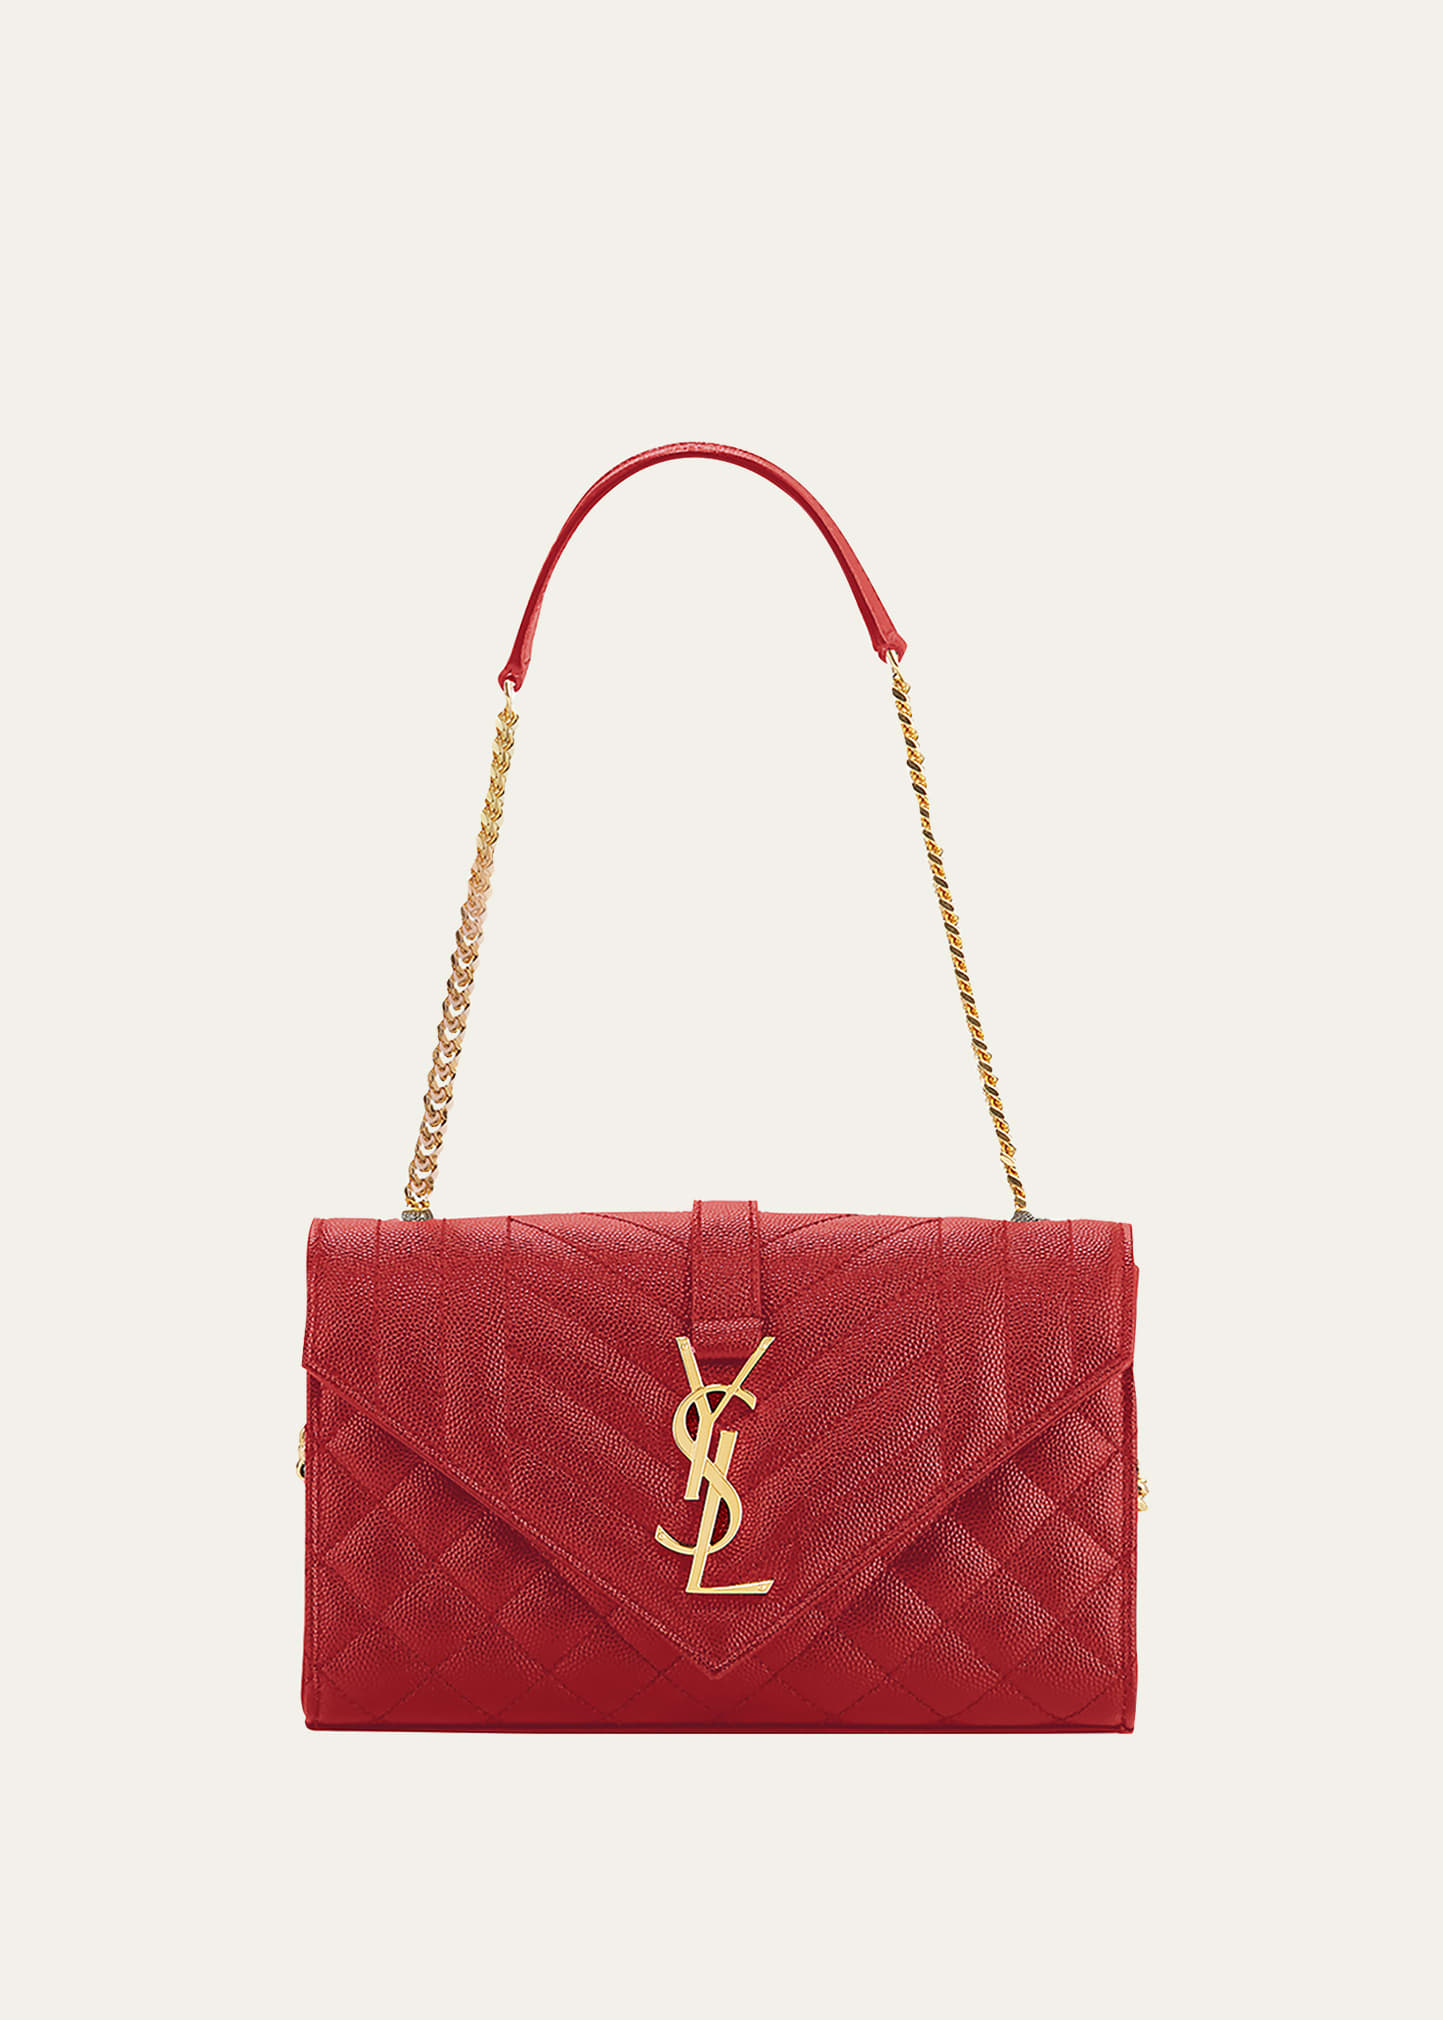 Saint Laurent Small Ysl Monogram Leather Satchel Bag In Opyum Red